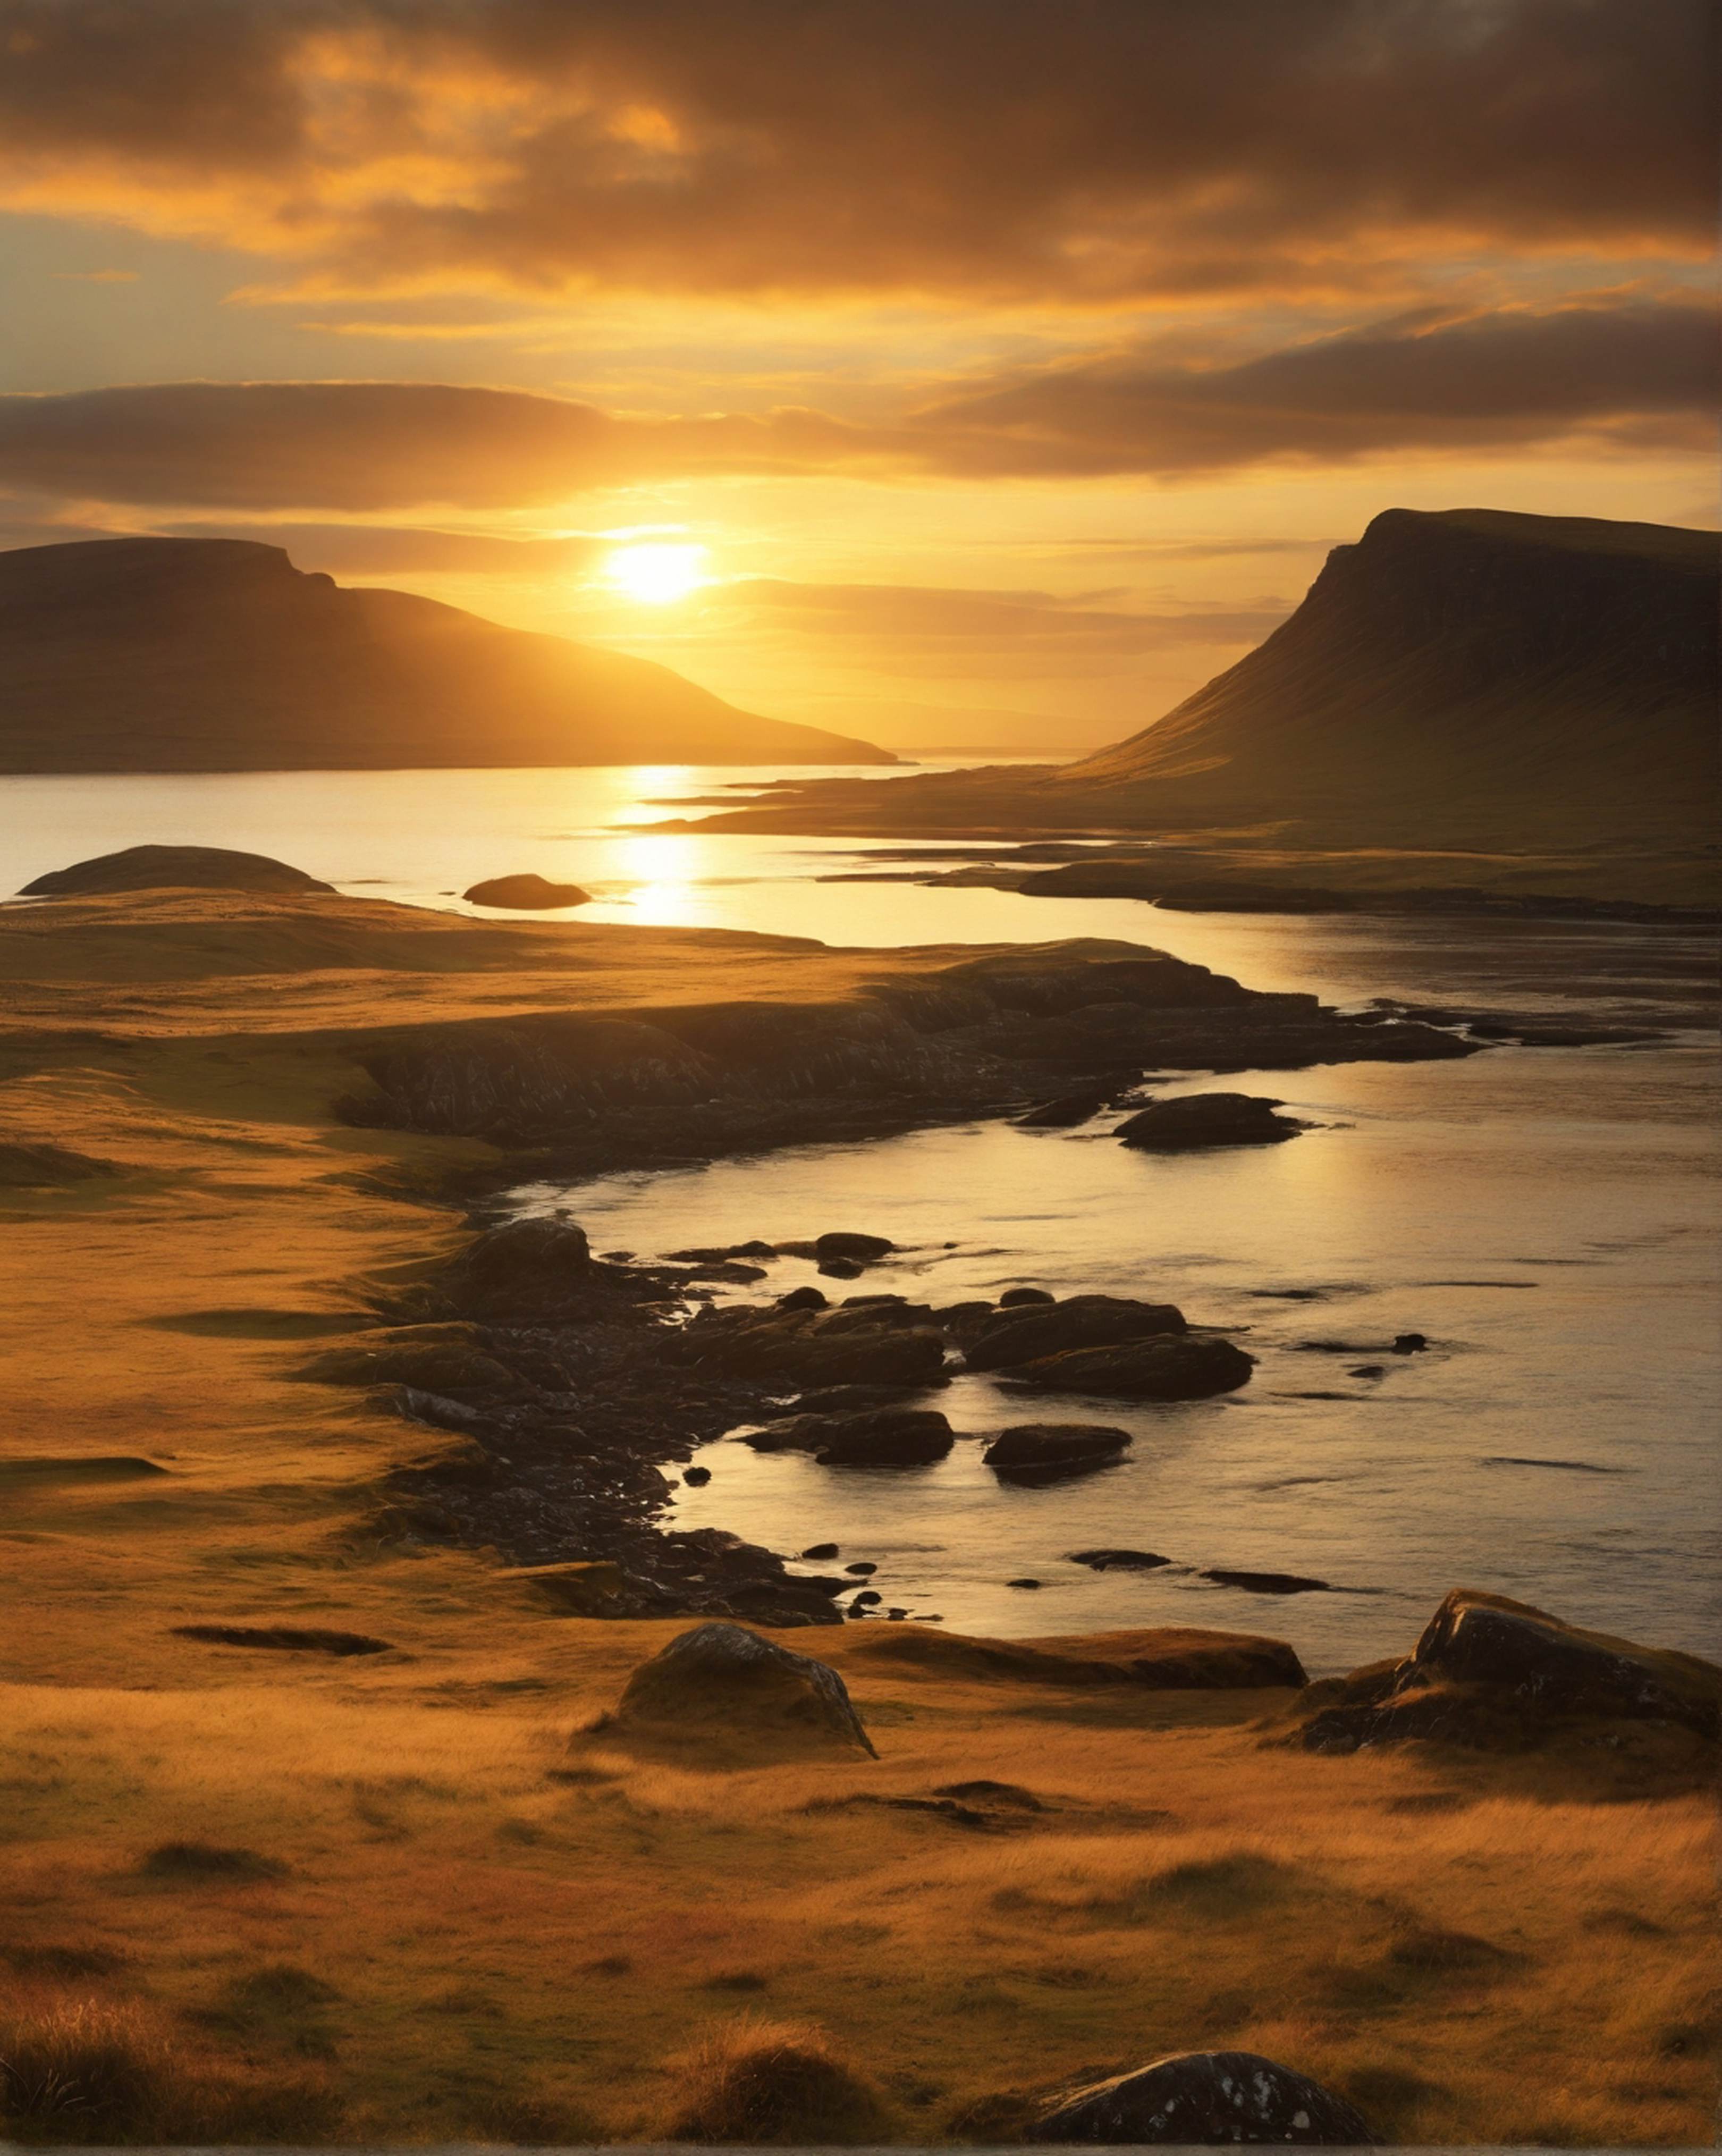 Nature's Detail: The Majestic Sunrise in Scotland